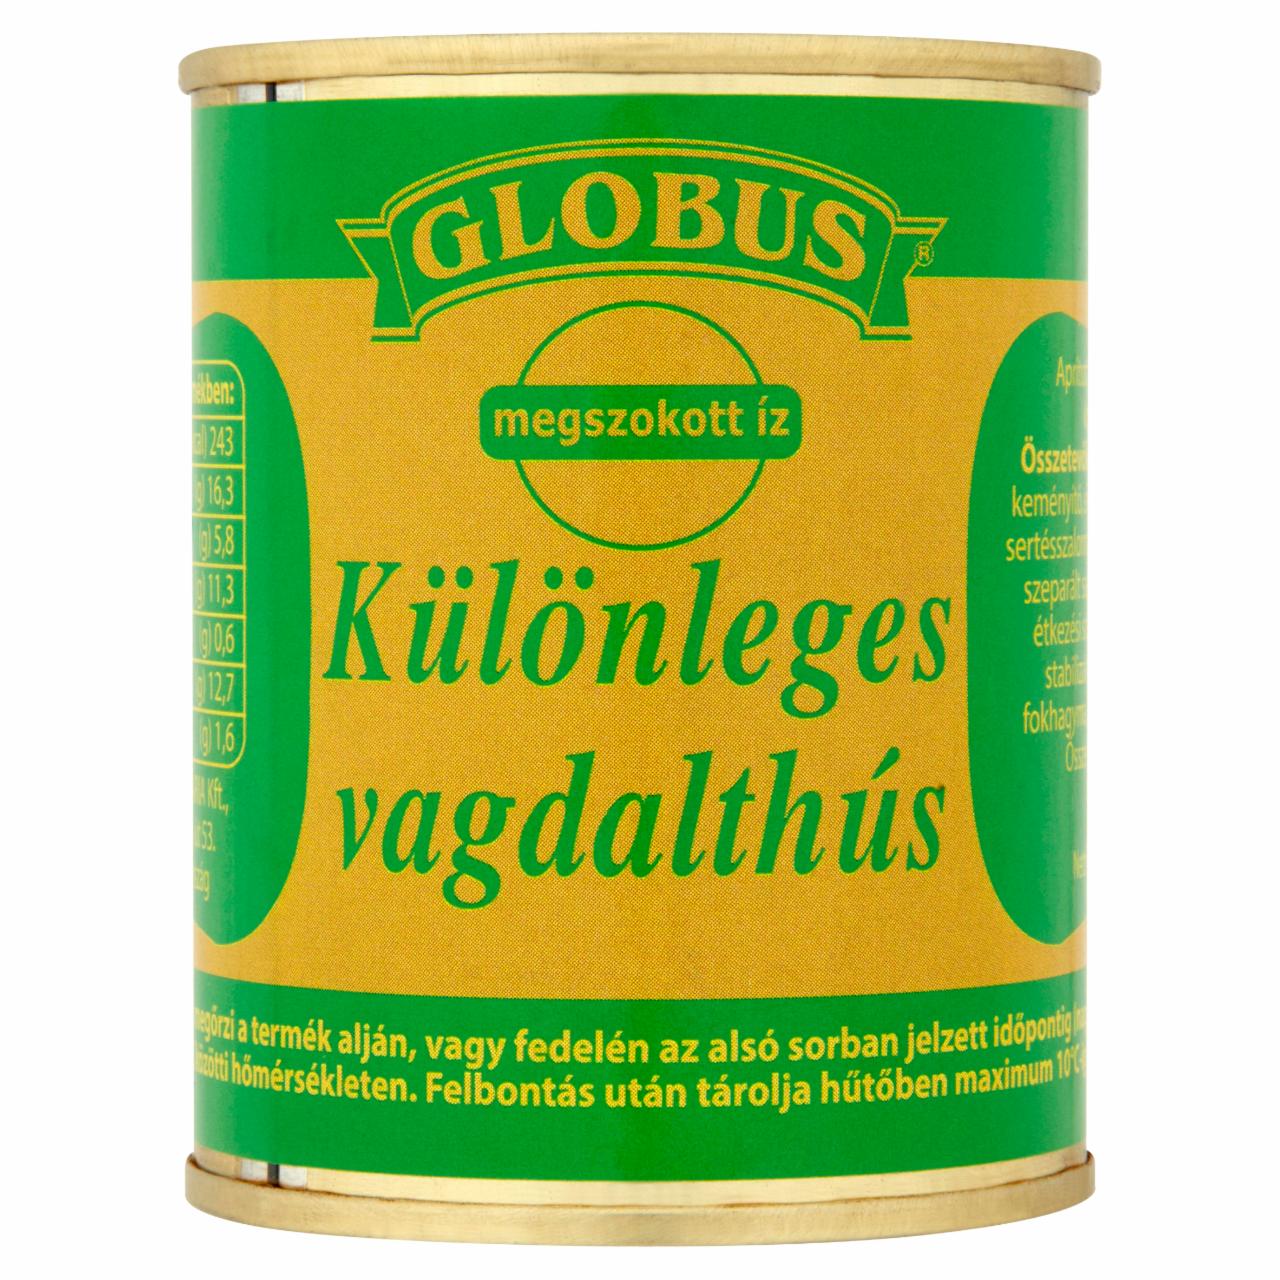 Képek - Globus különleges vagdalthús 130 g